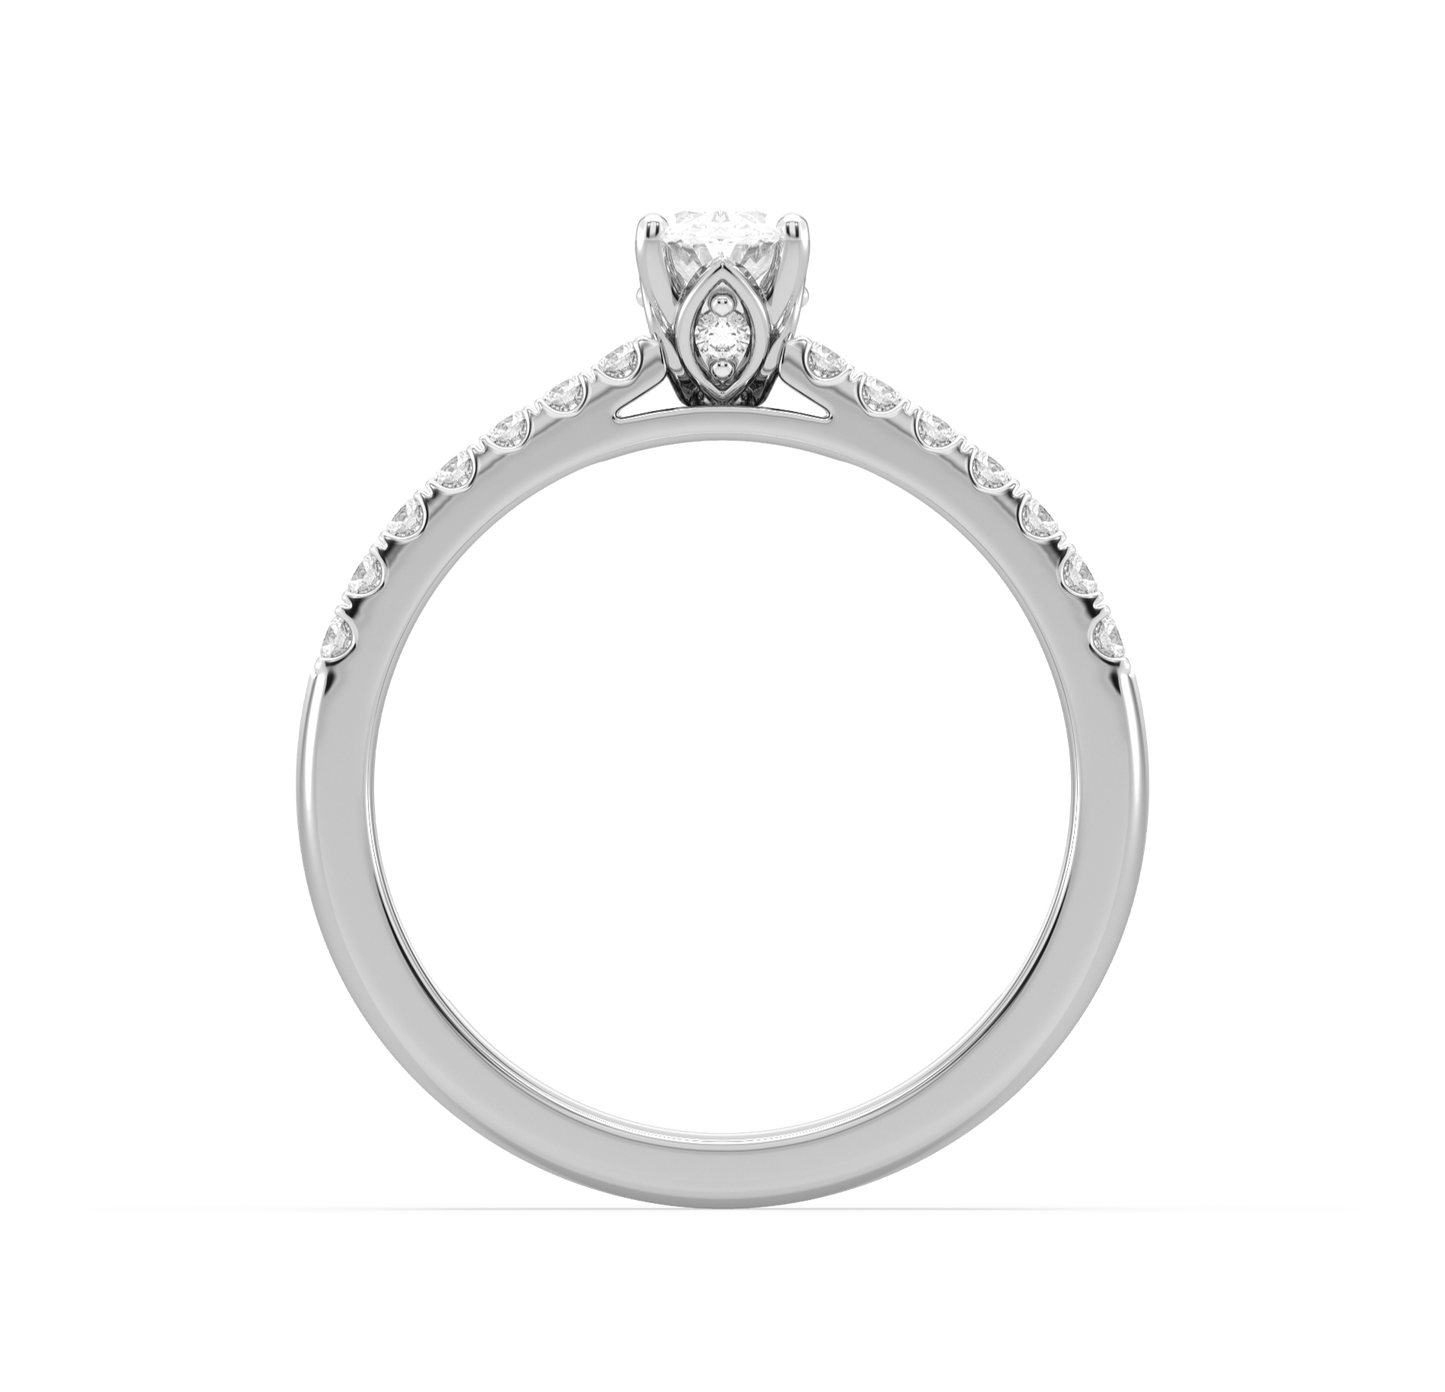 Customised ring RG21010-PH21026